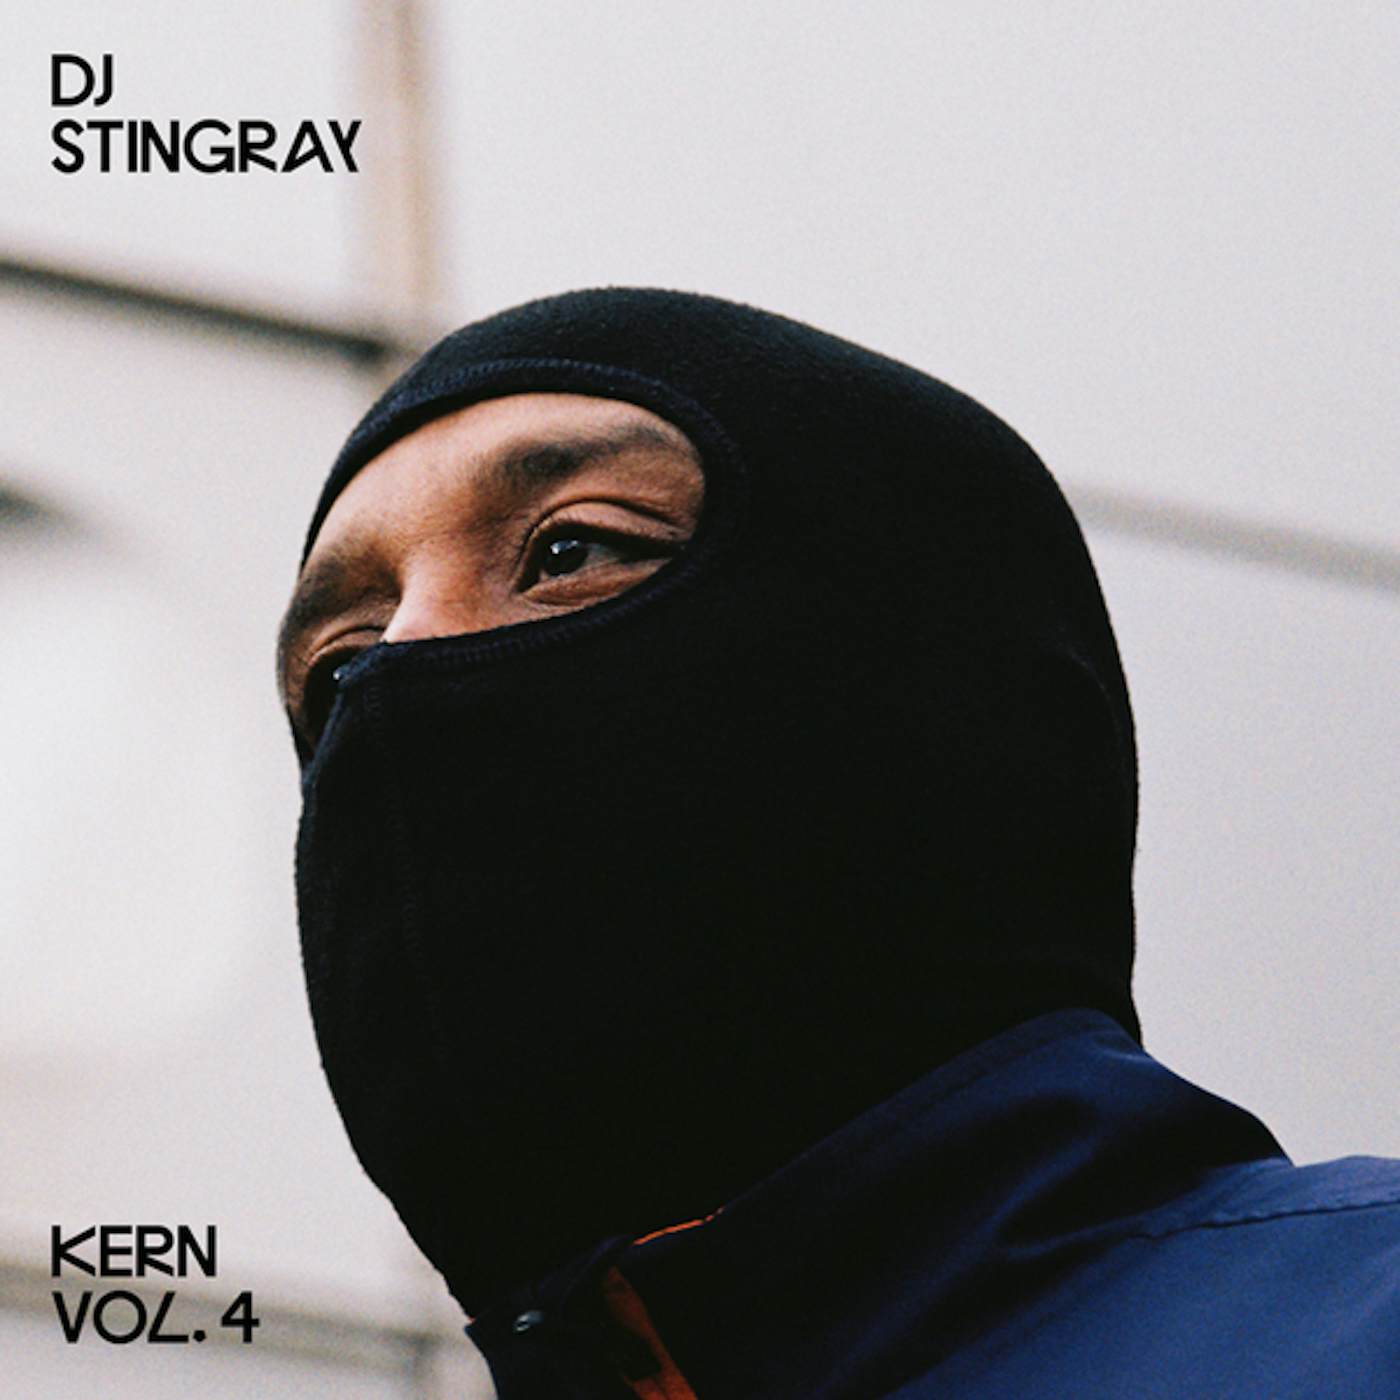 DJ Stingray KERN 4 Vinyl Record